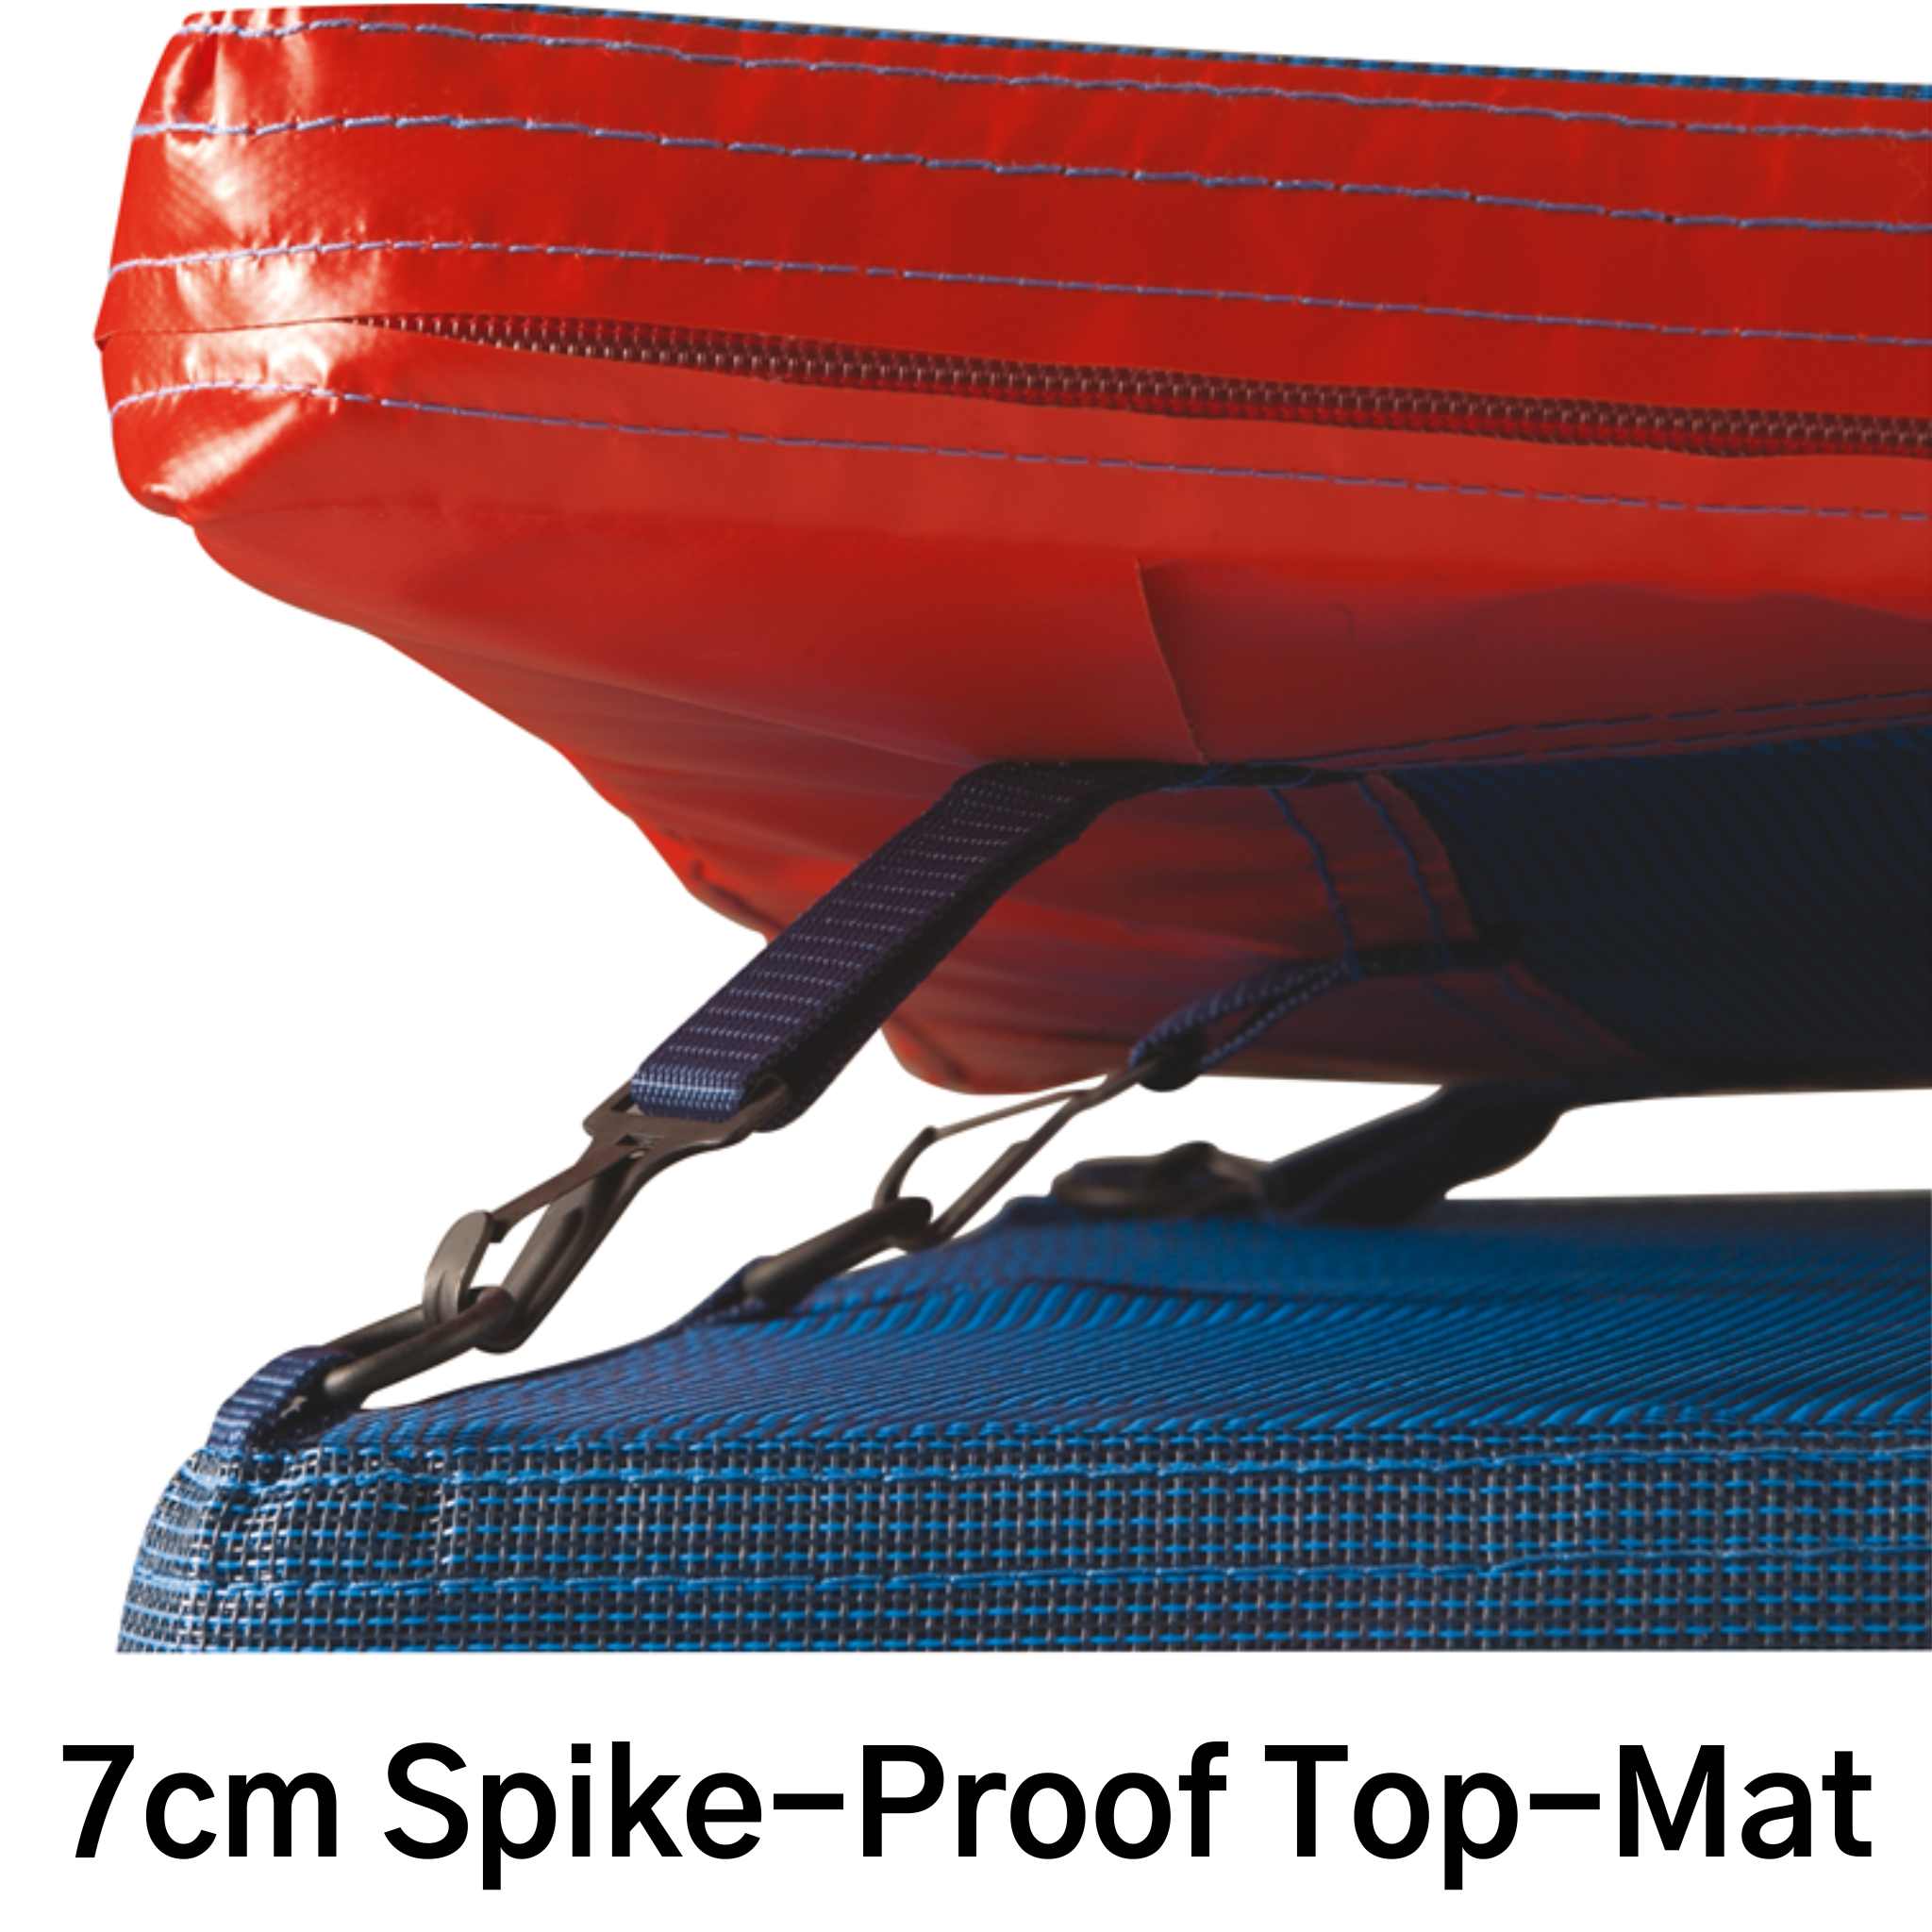 DIMA Pole Vault Landing System | Meeting Bed | 7cm Spike-Proof Top Mat with hidden straps